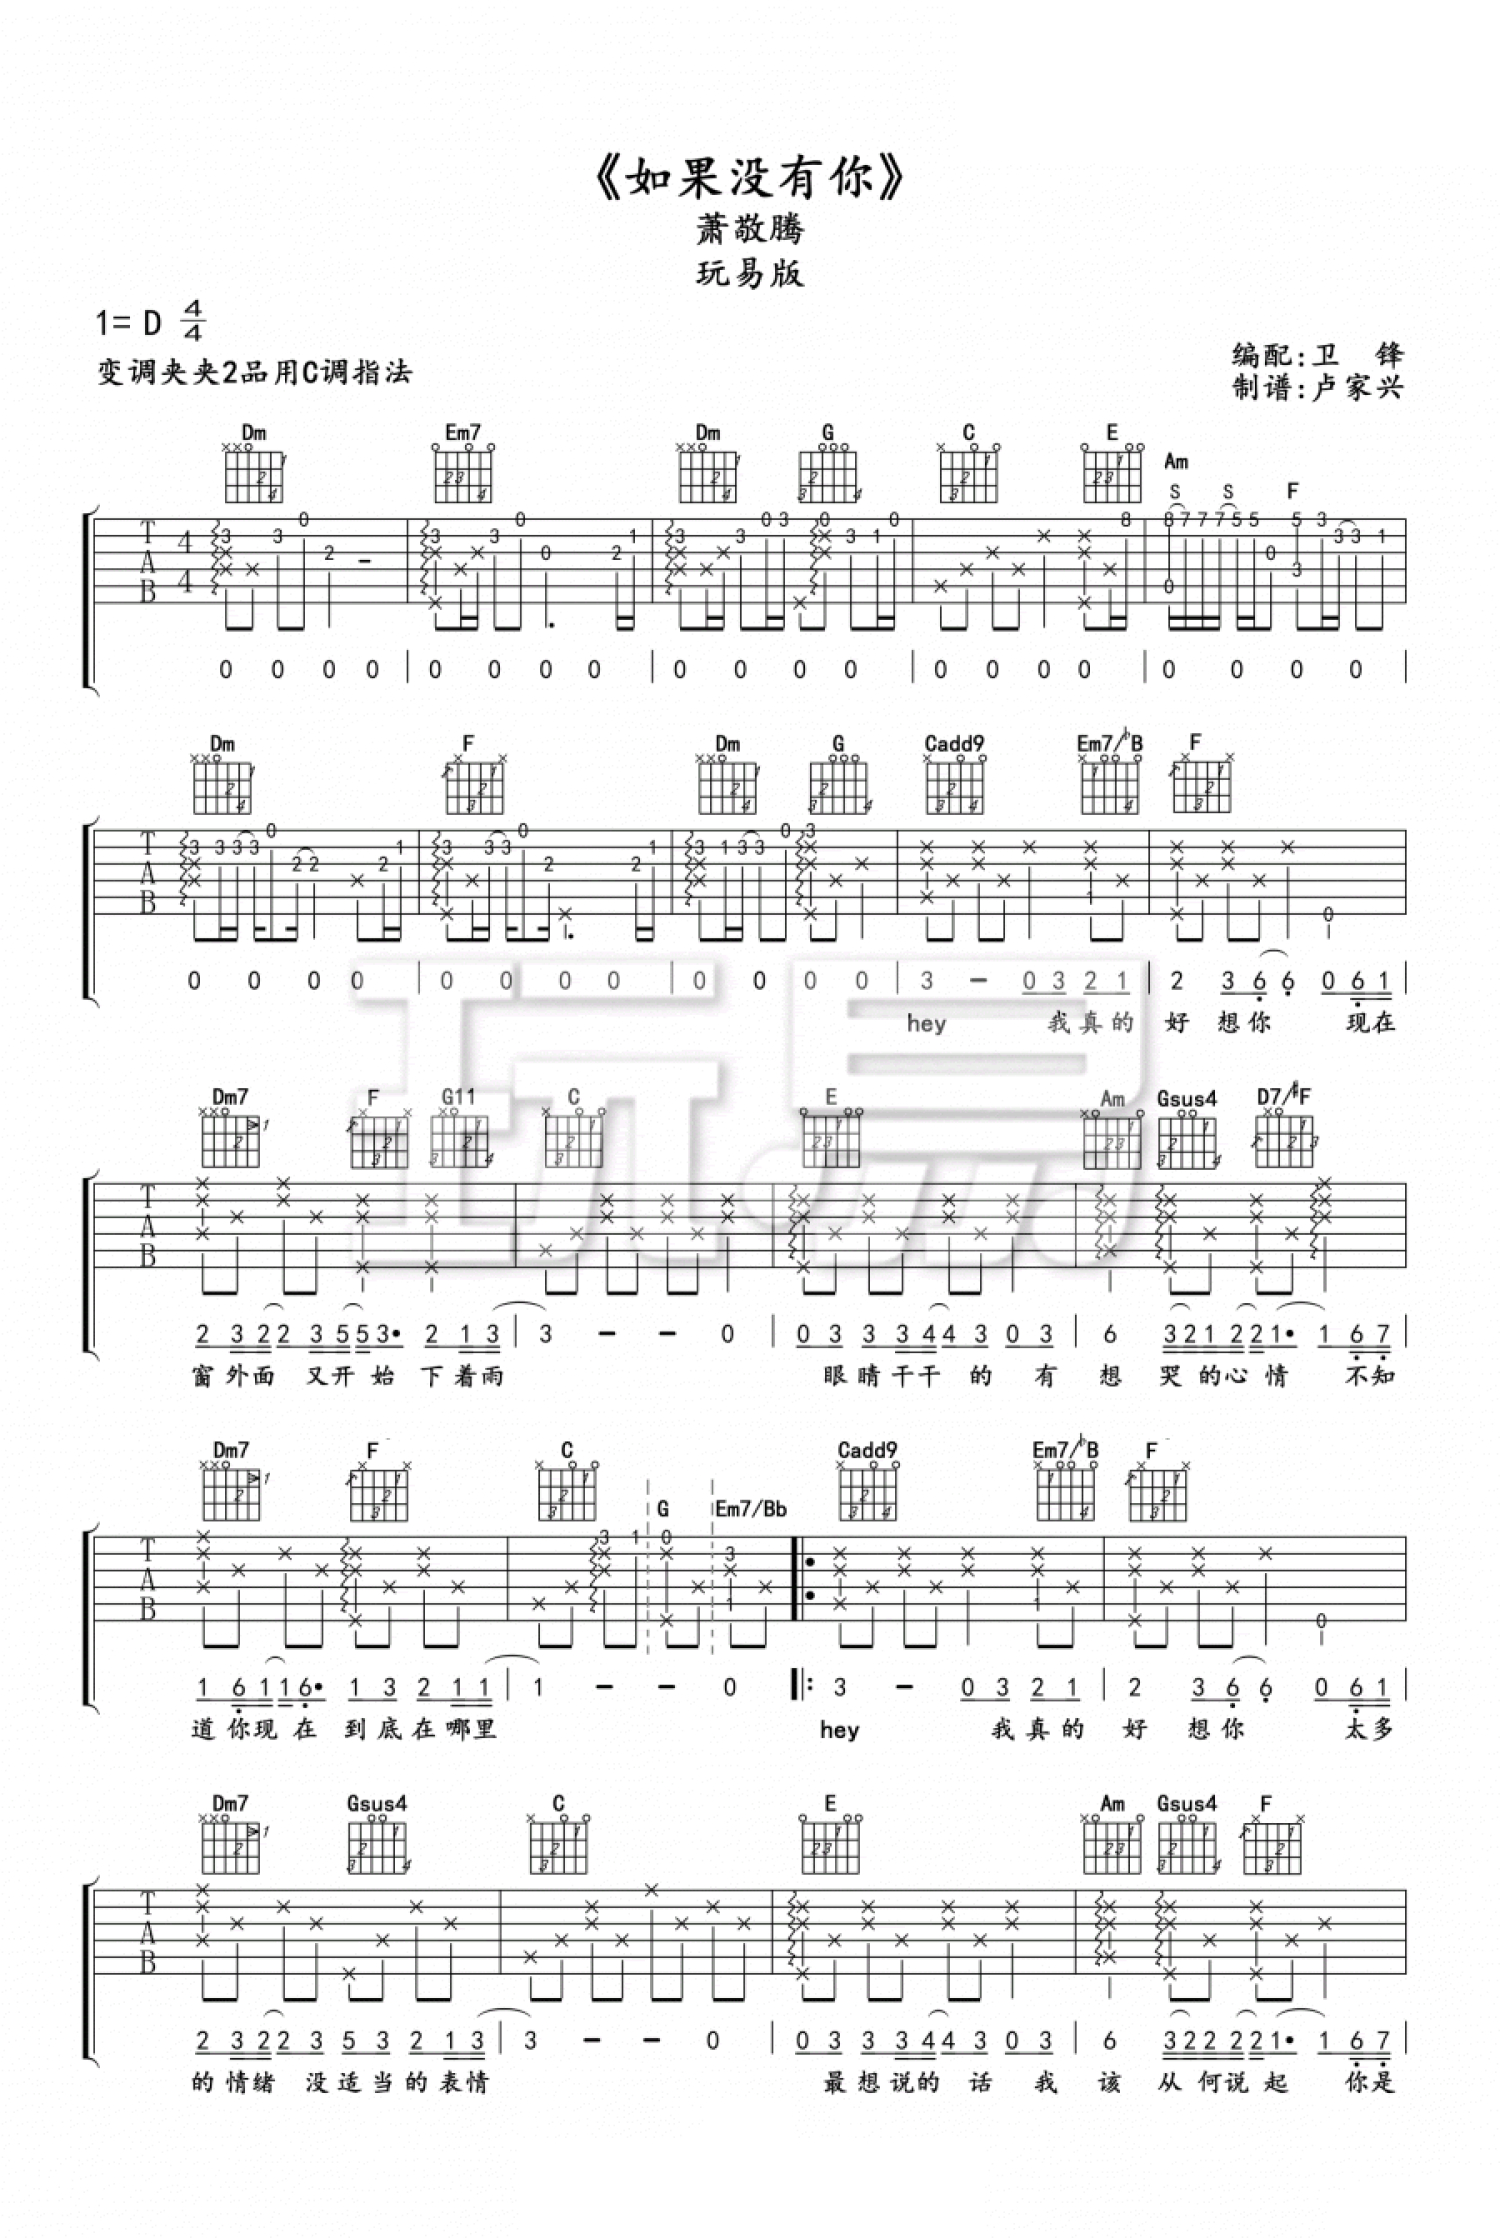 Blues吉他谱 - 萧敬腾 - C调吉他弹唱谱 - 和弦谱 - 琴谱网